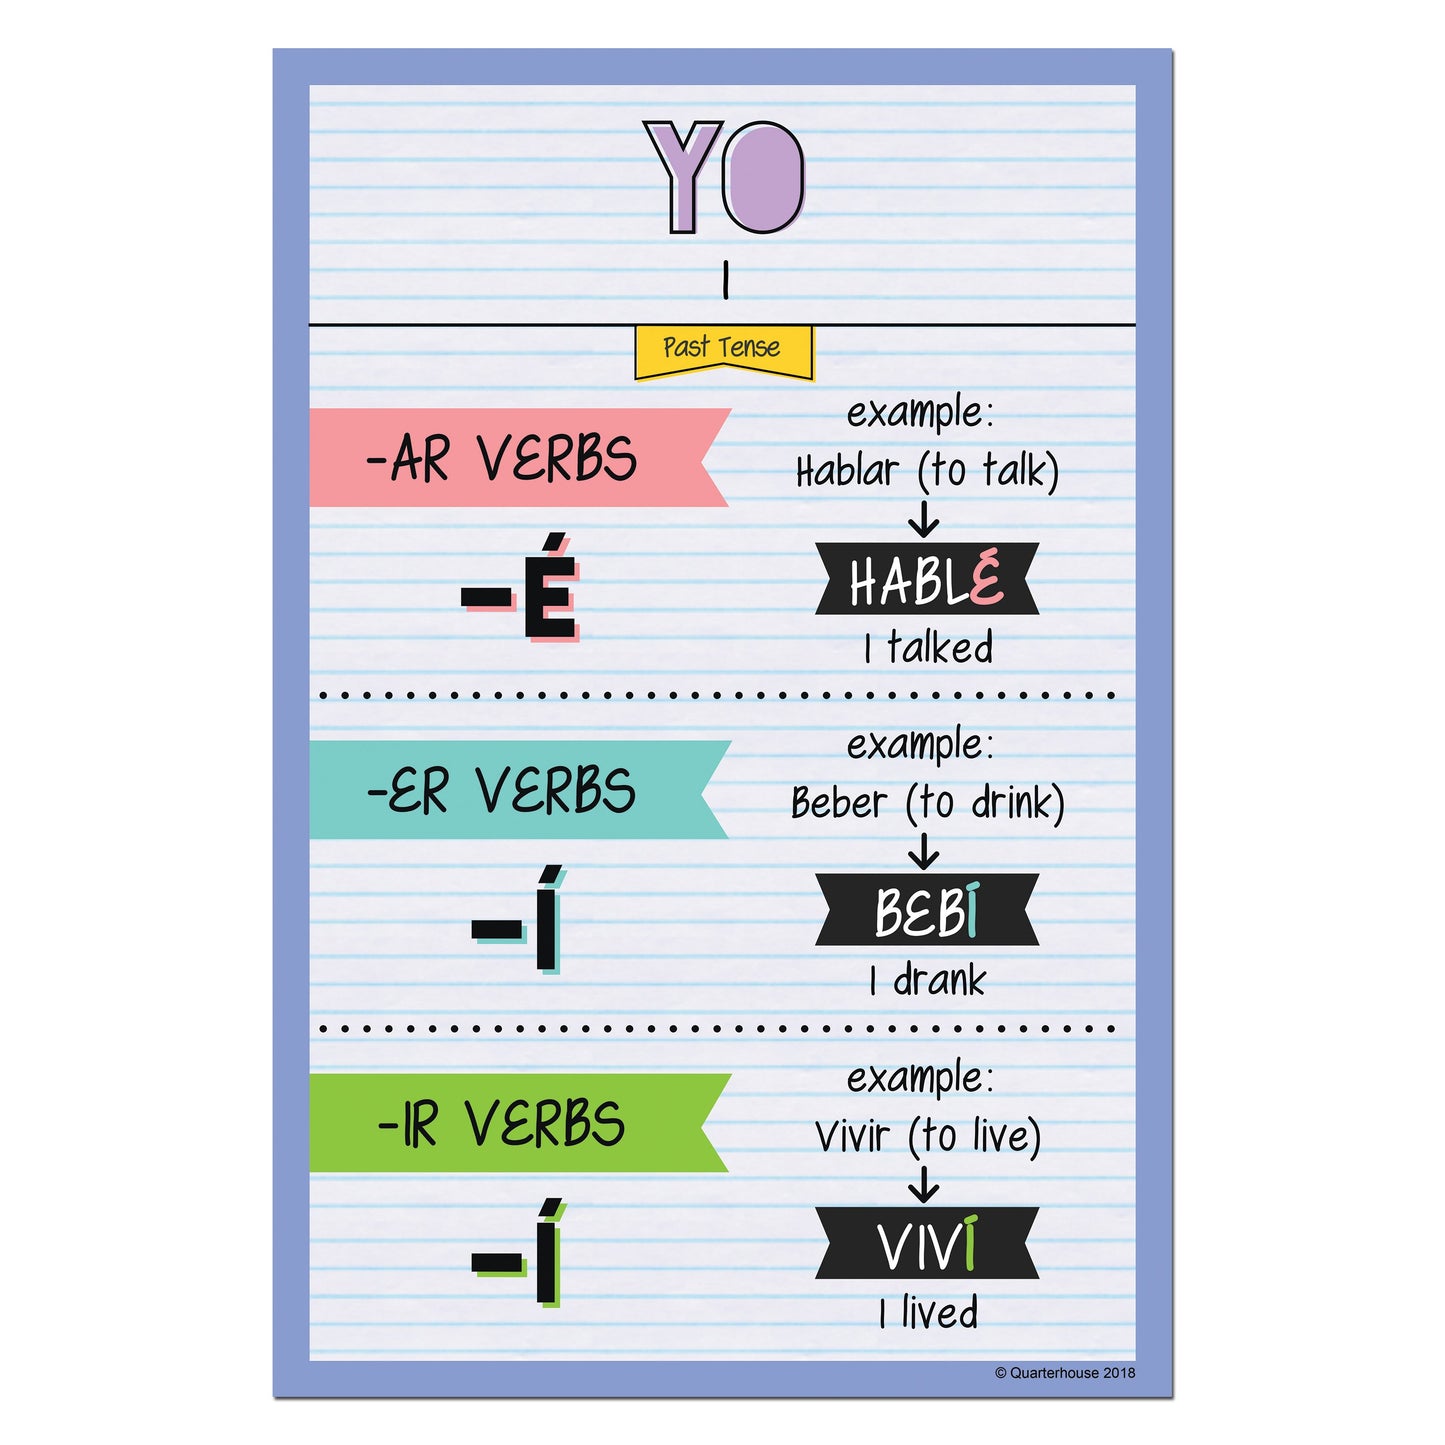 Quarterhouse Yo - Past Tense Spanish Verb Conjugation Poster, Spanish and ESL Classroom Materials for Teachers